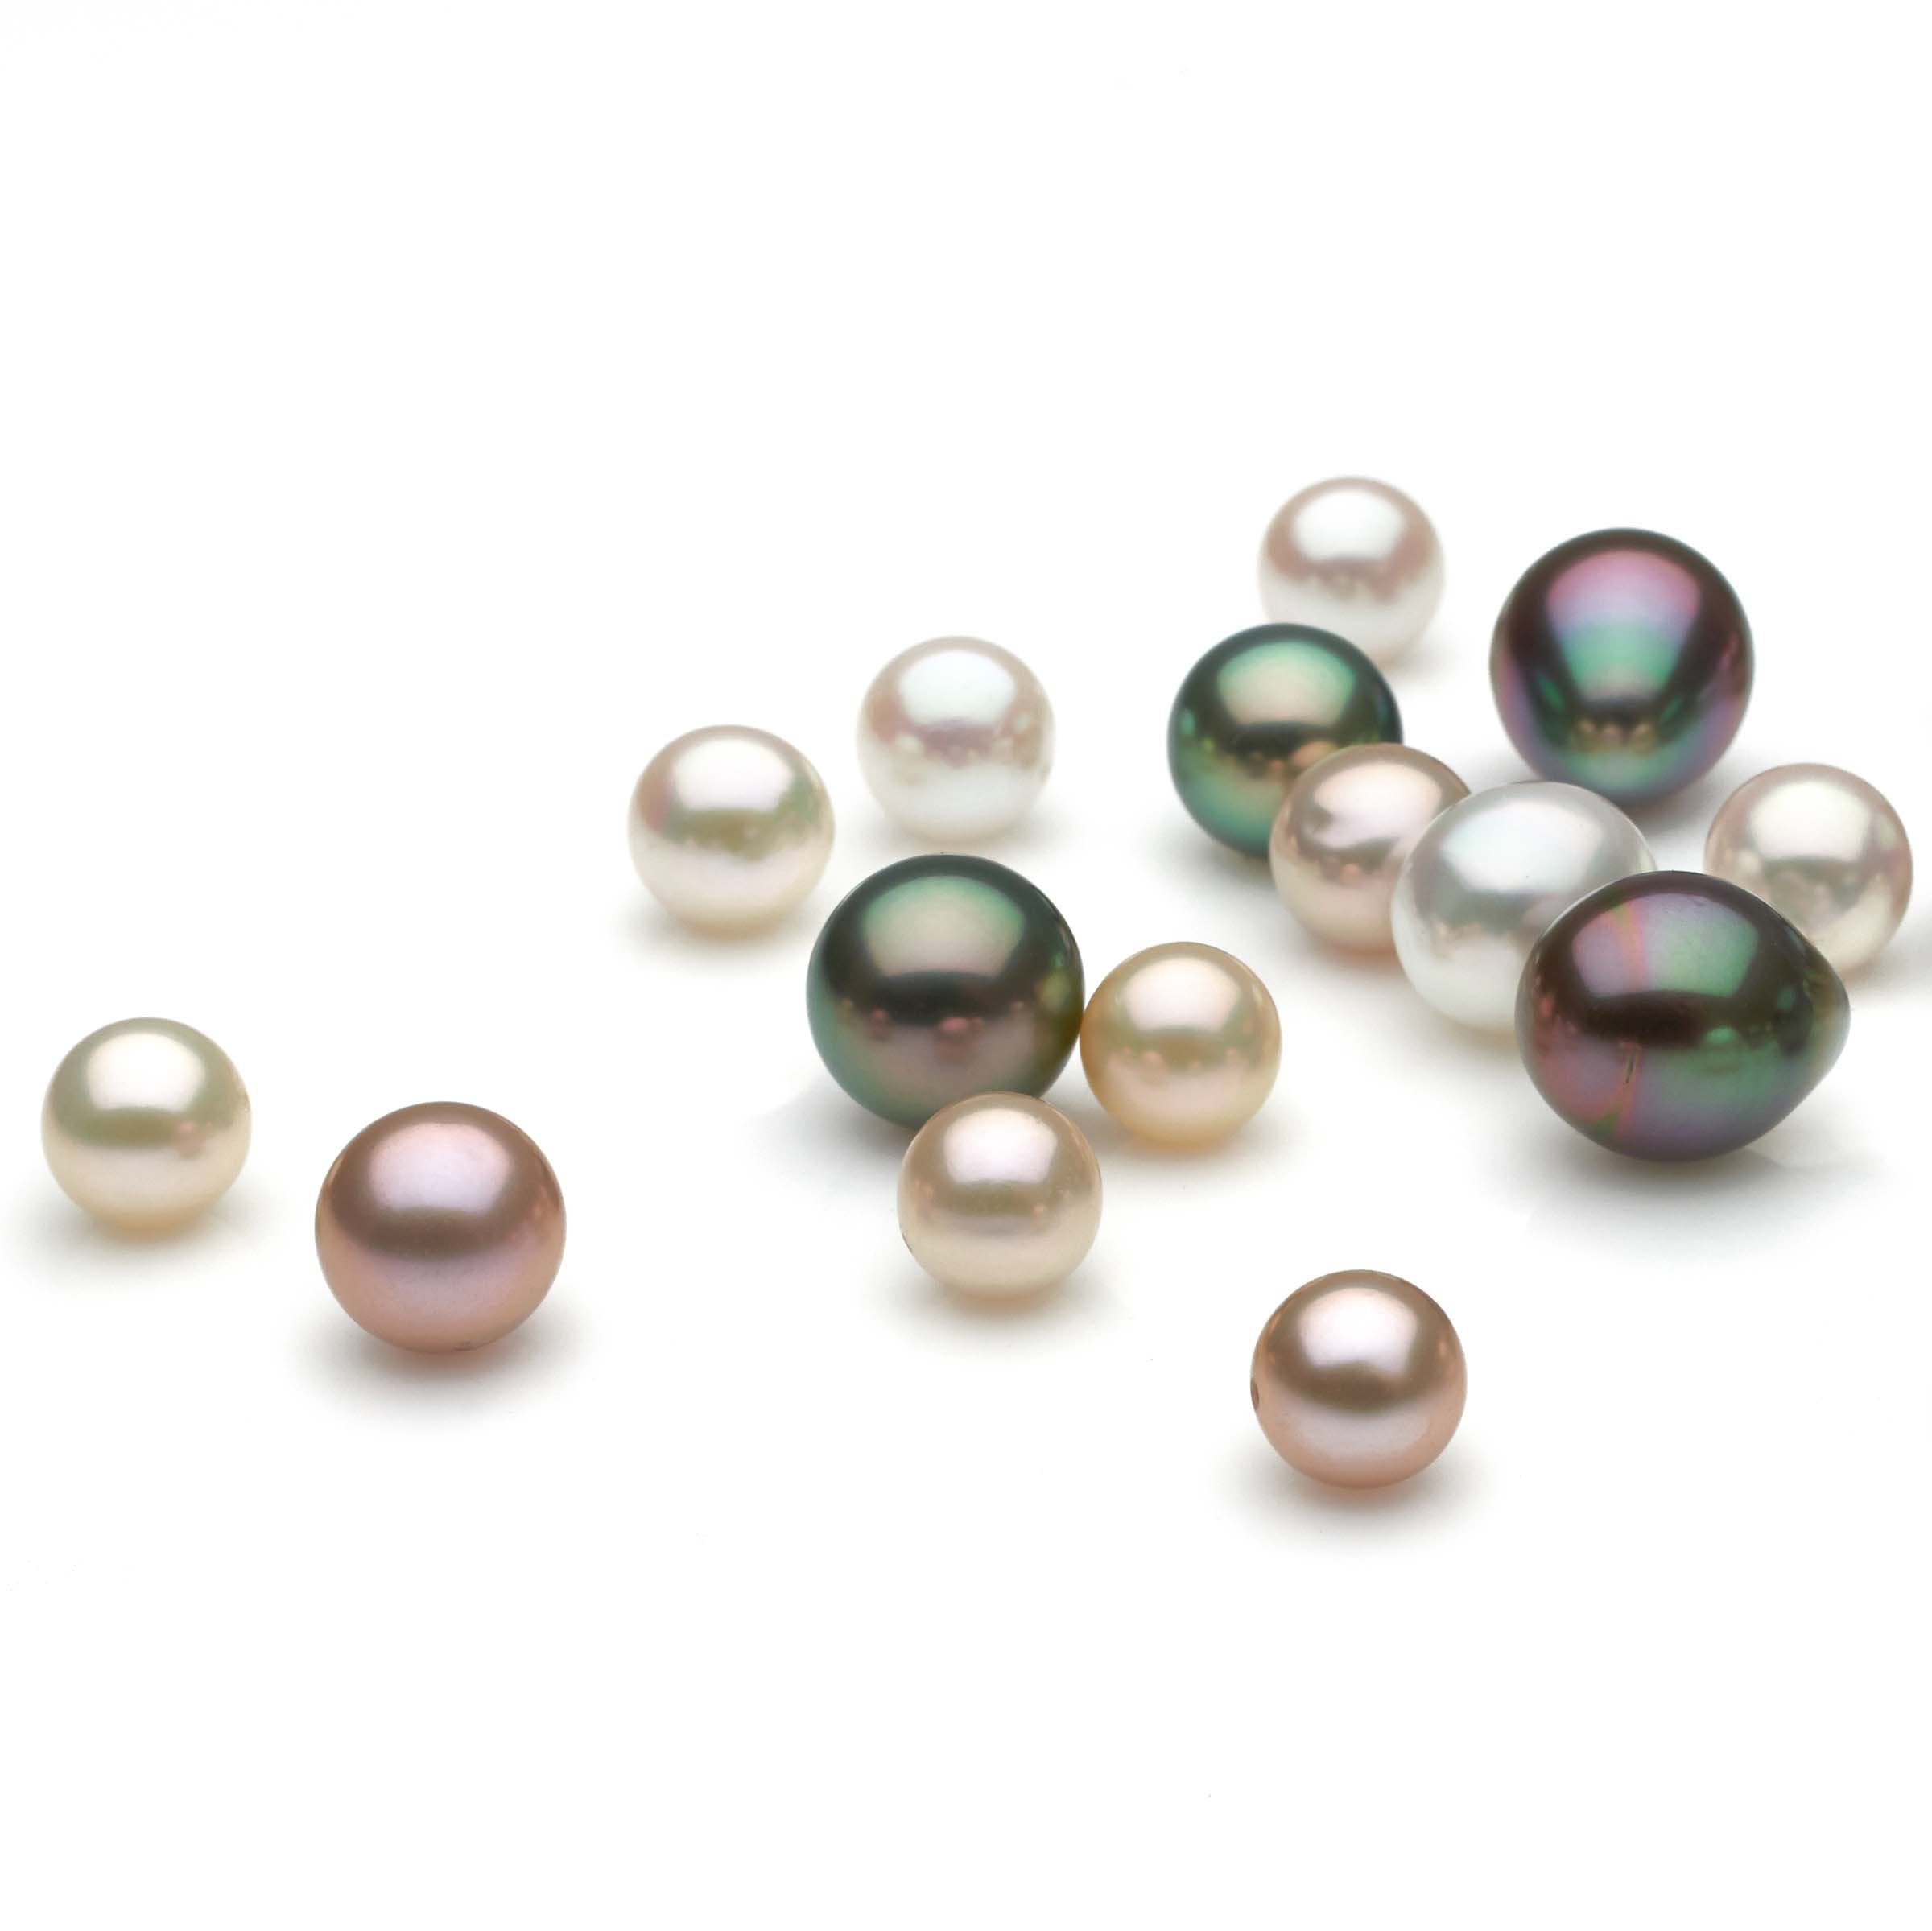 High quality loose Tahitian, South Sea, akoya and freshwater pearls